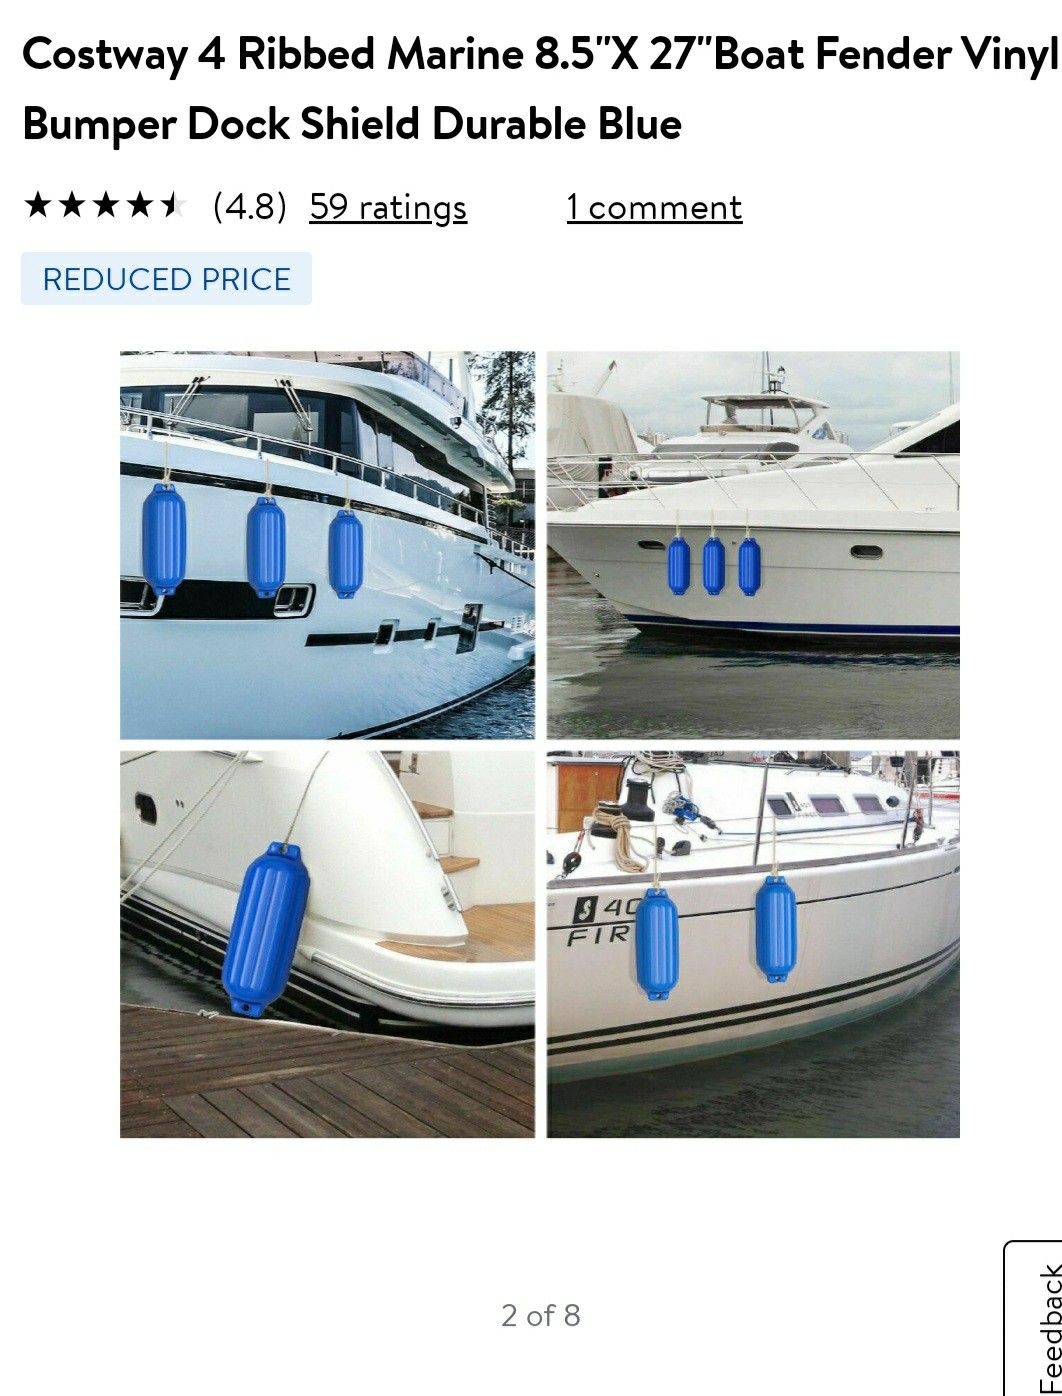 Boat Fender Vinyl Bumper Dock Shield Durable Blue